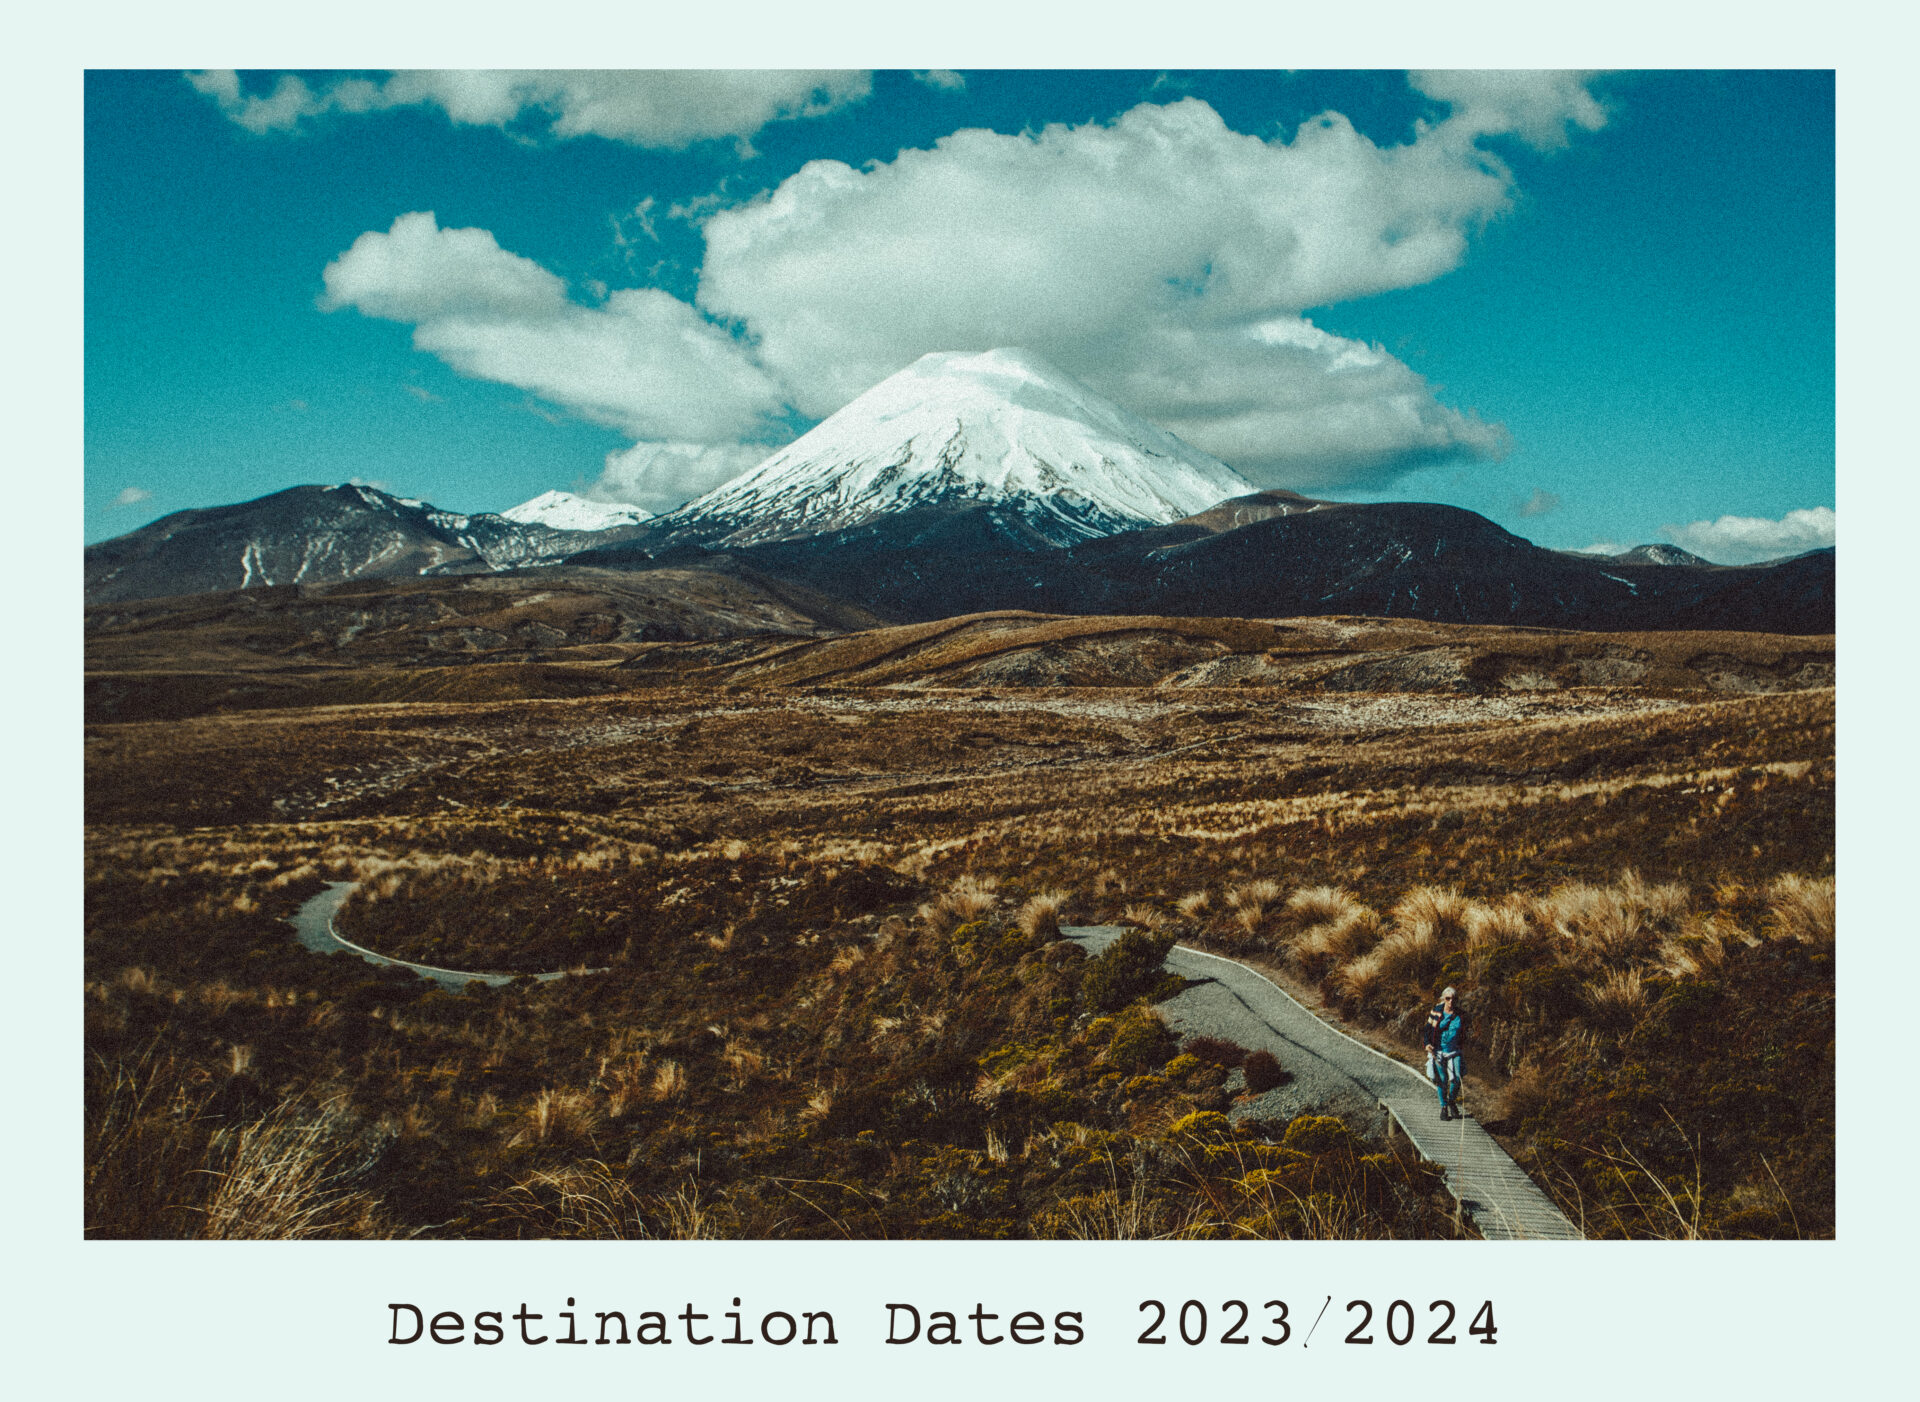 Destination dates. Image of person walking in wilderness